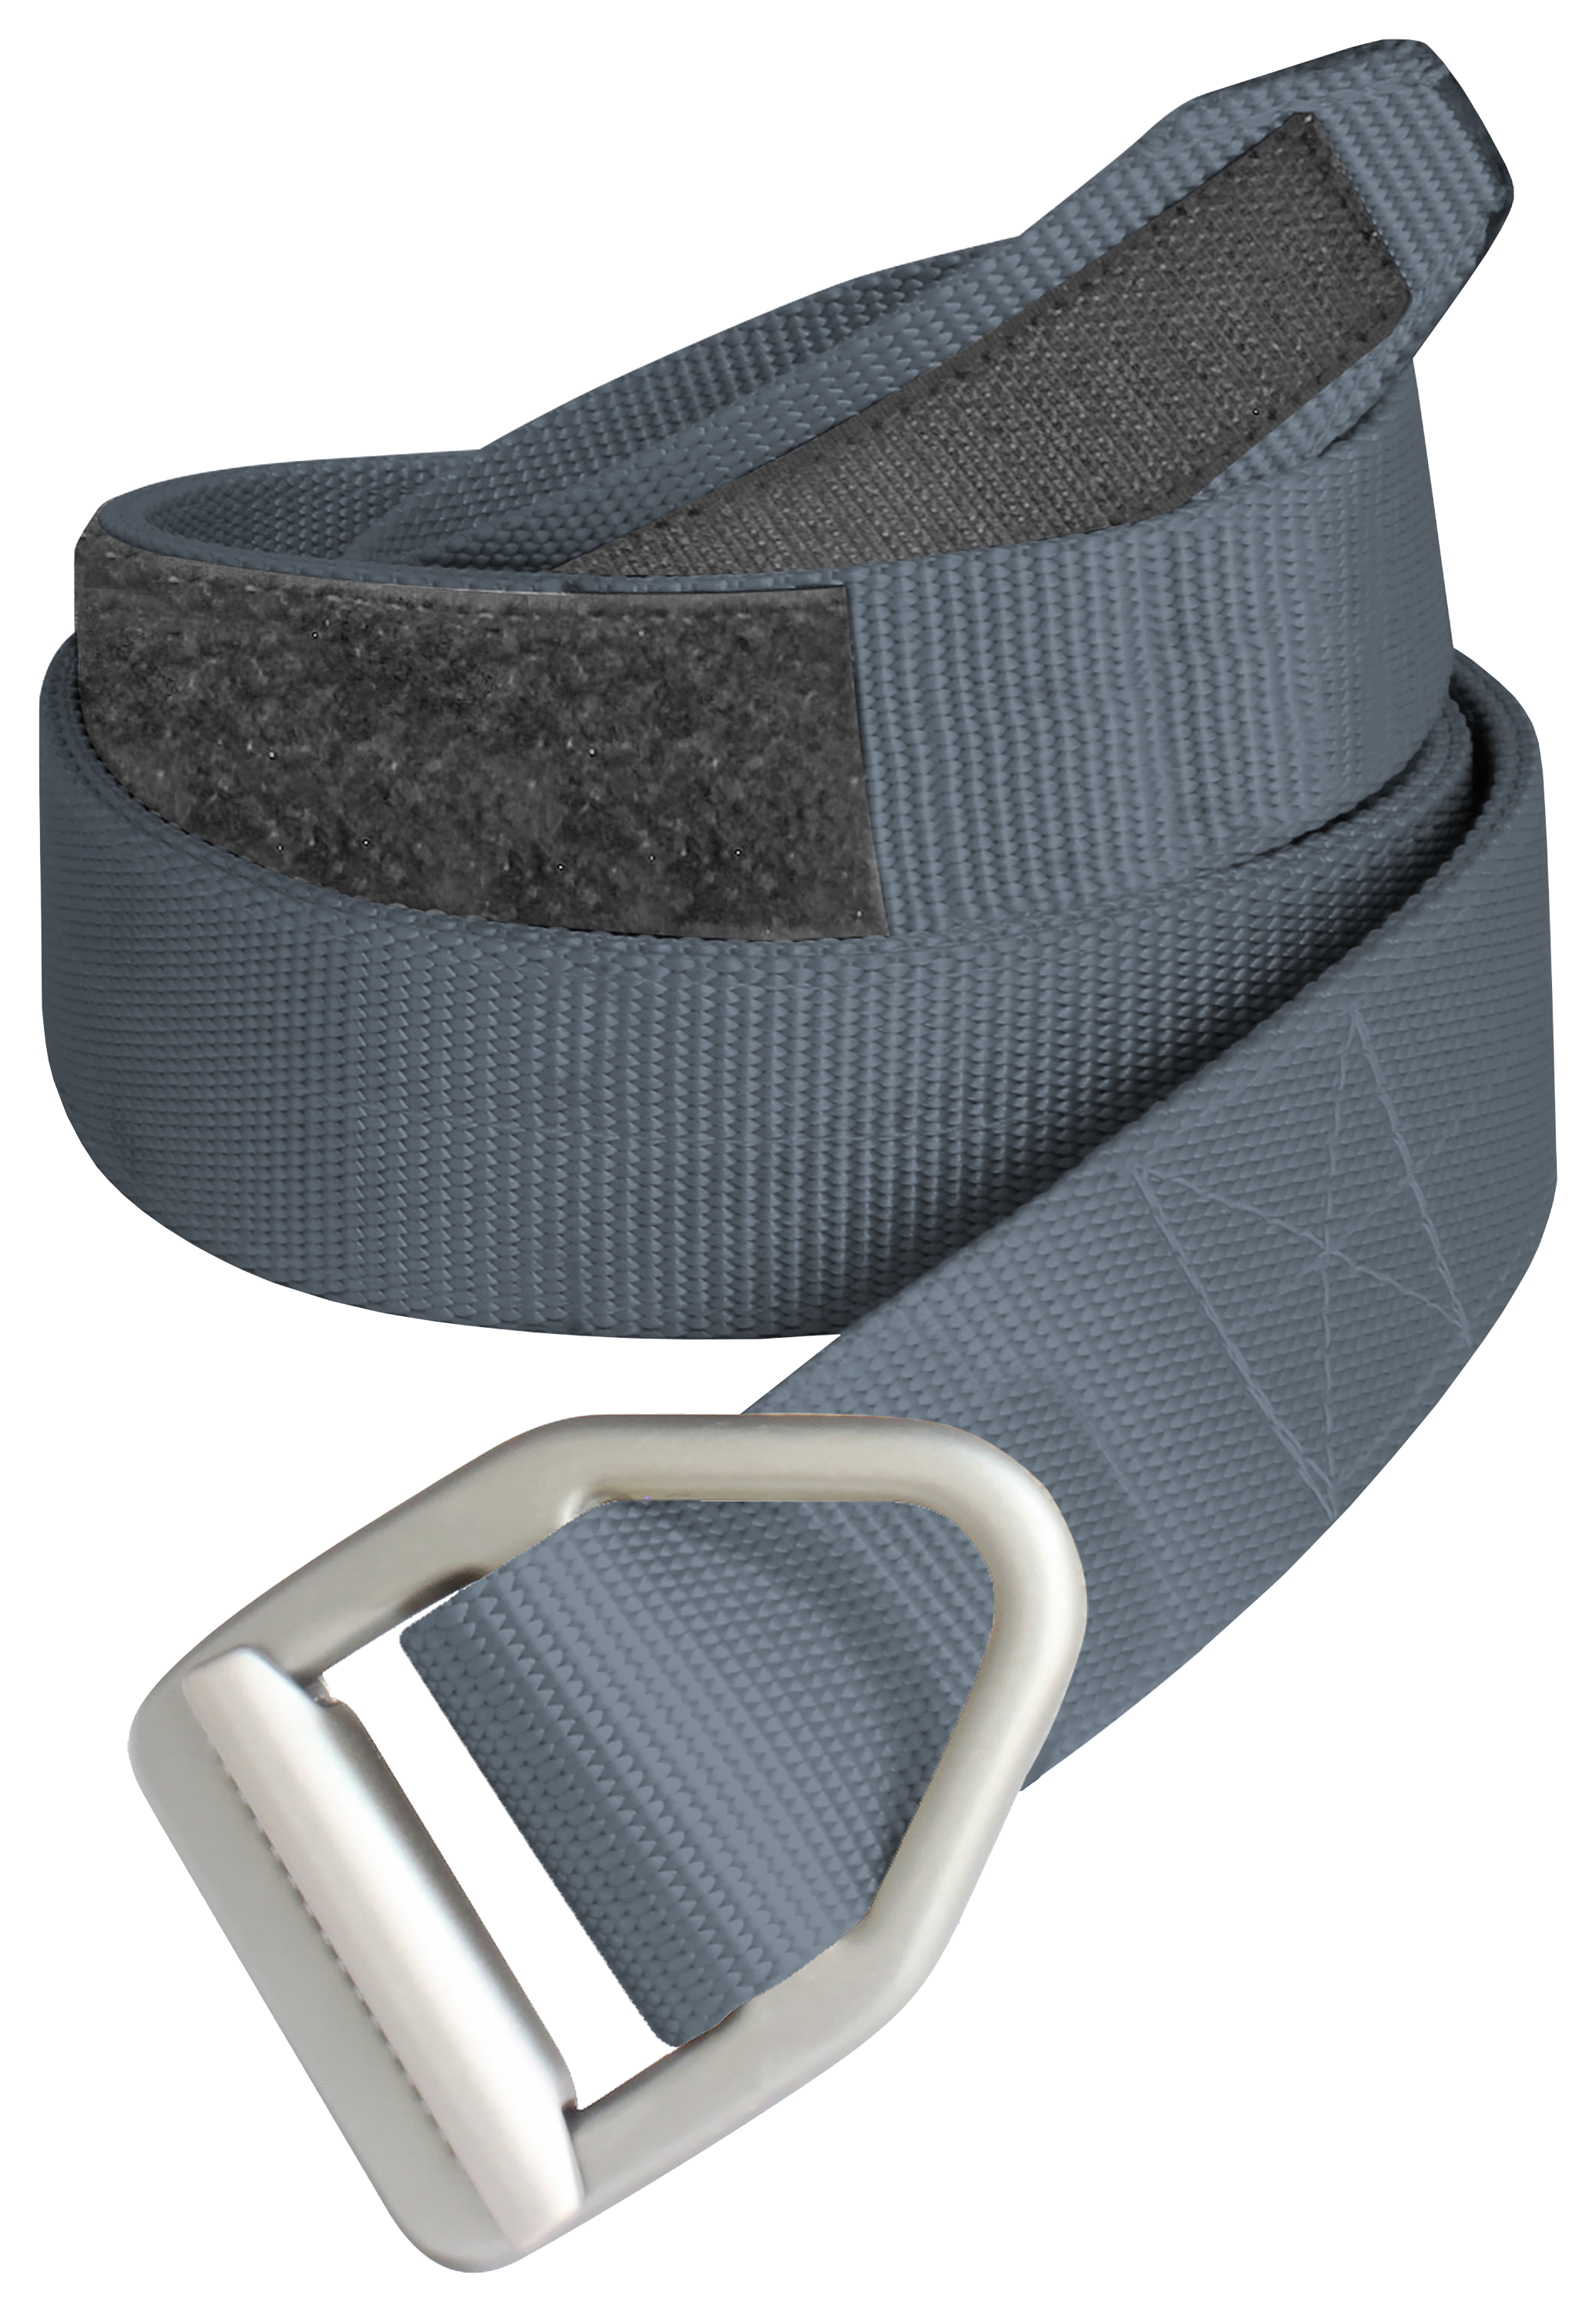 Bison Designs Last Chance Heavy-Duty Belt for Men - Graphite - S